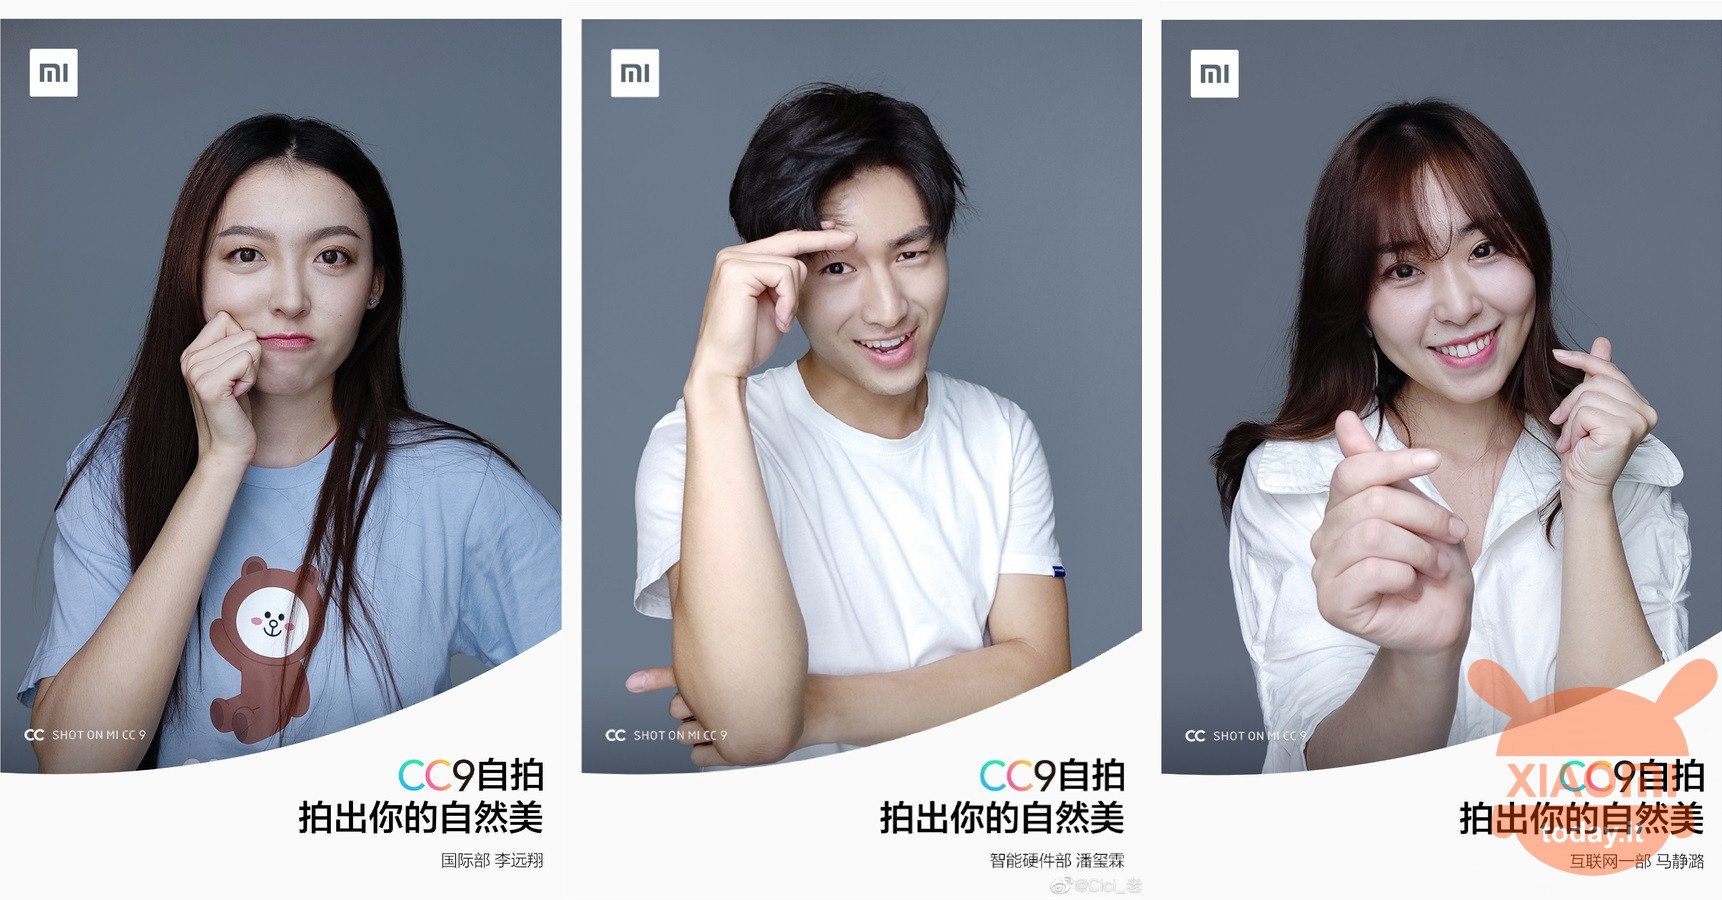 most handsome Xiaomi employee